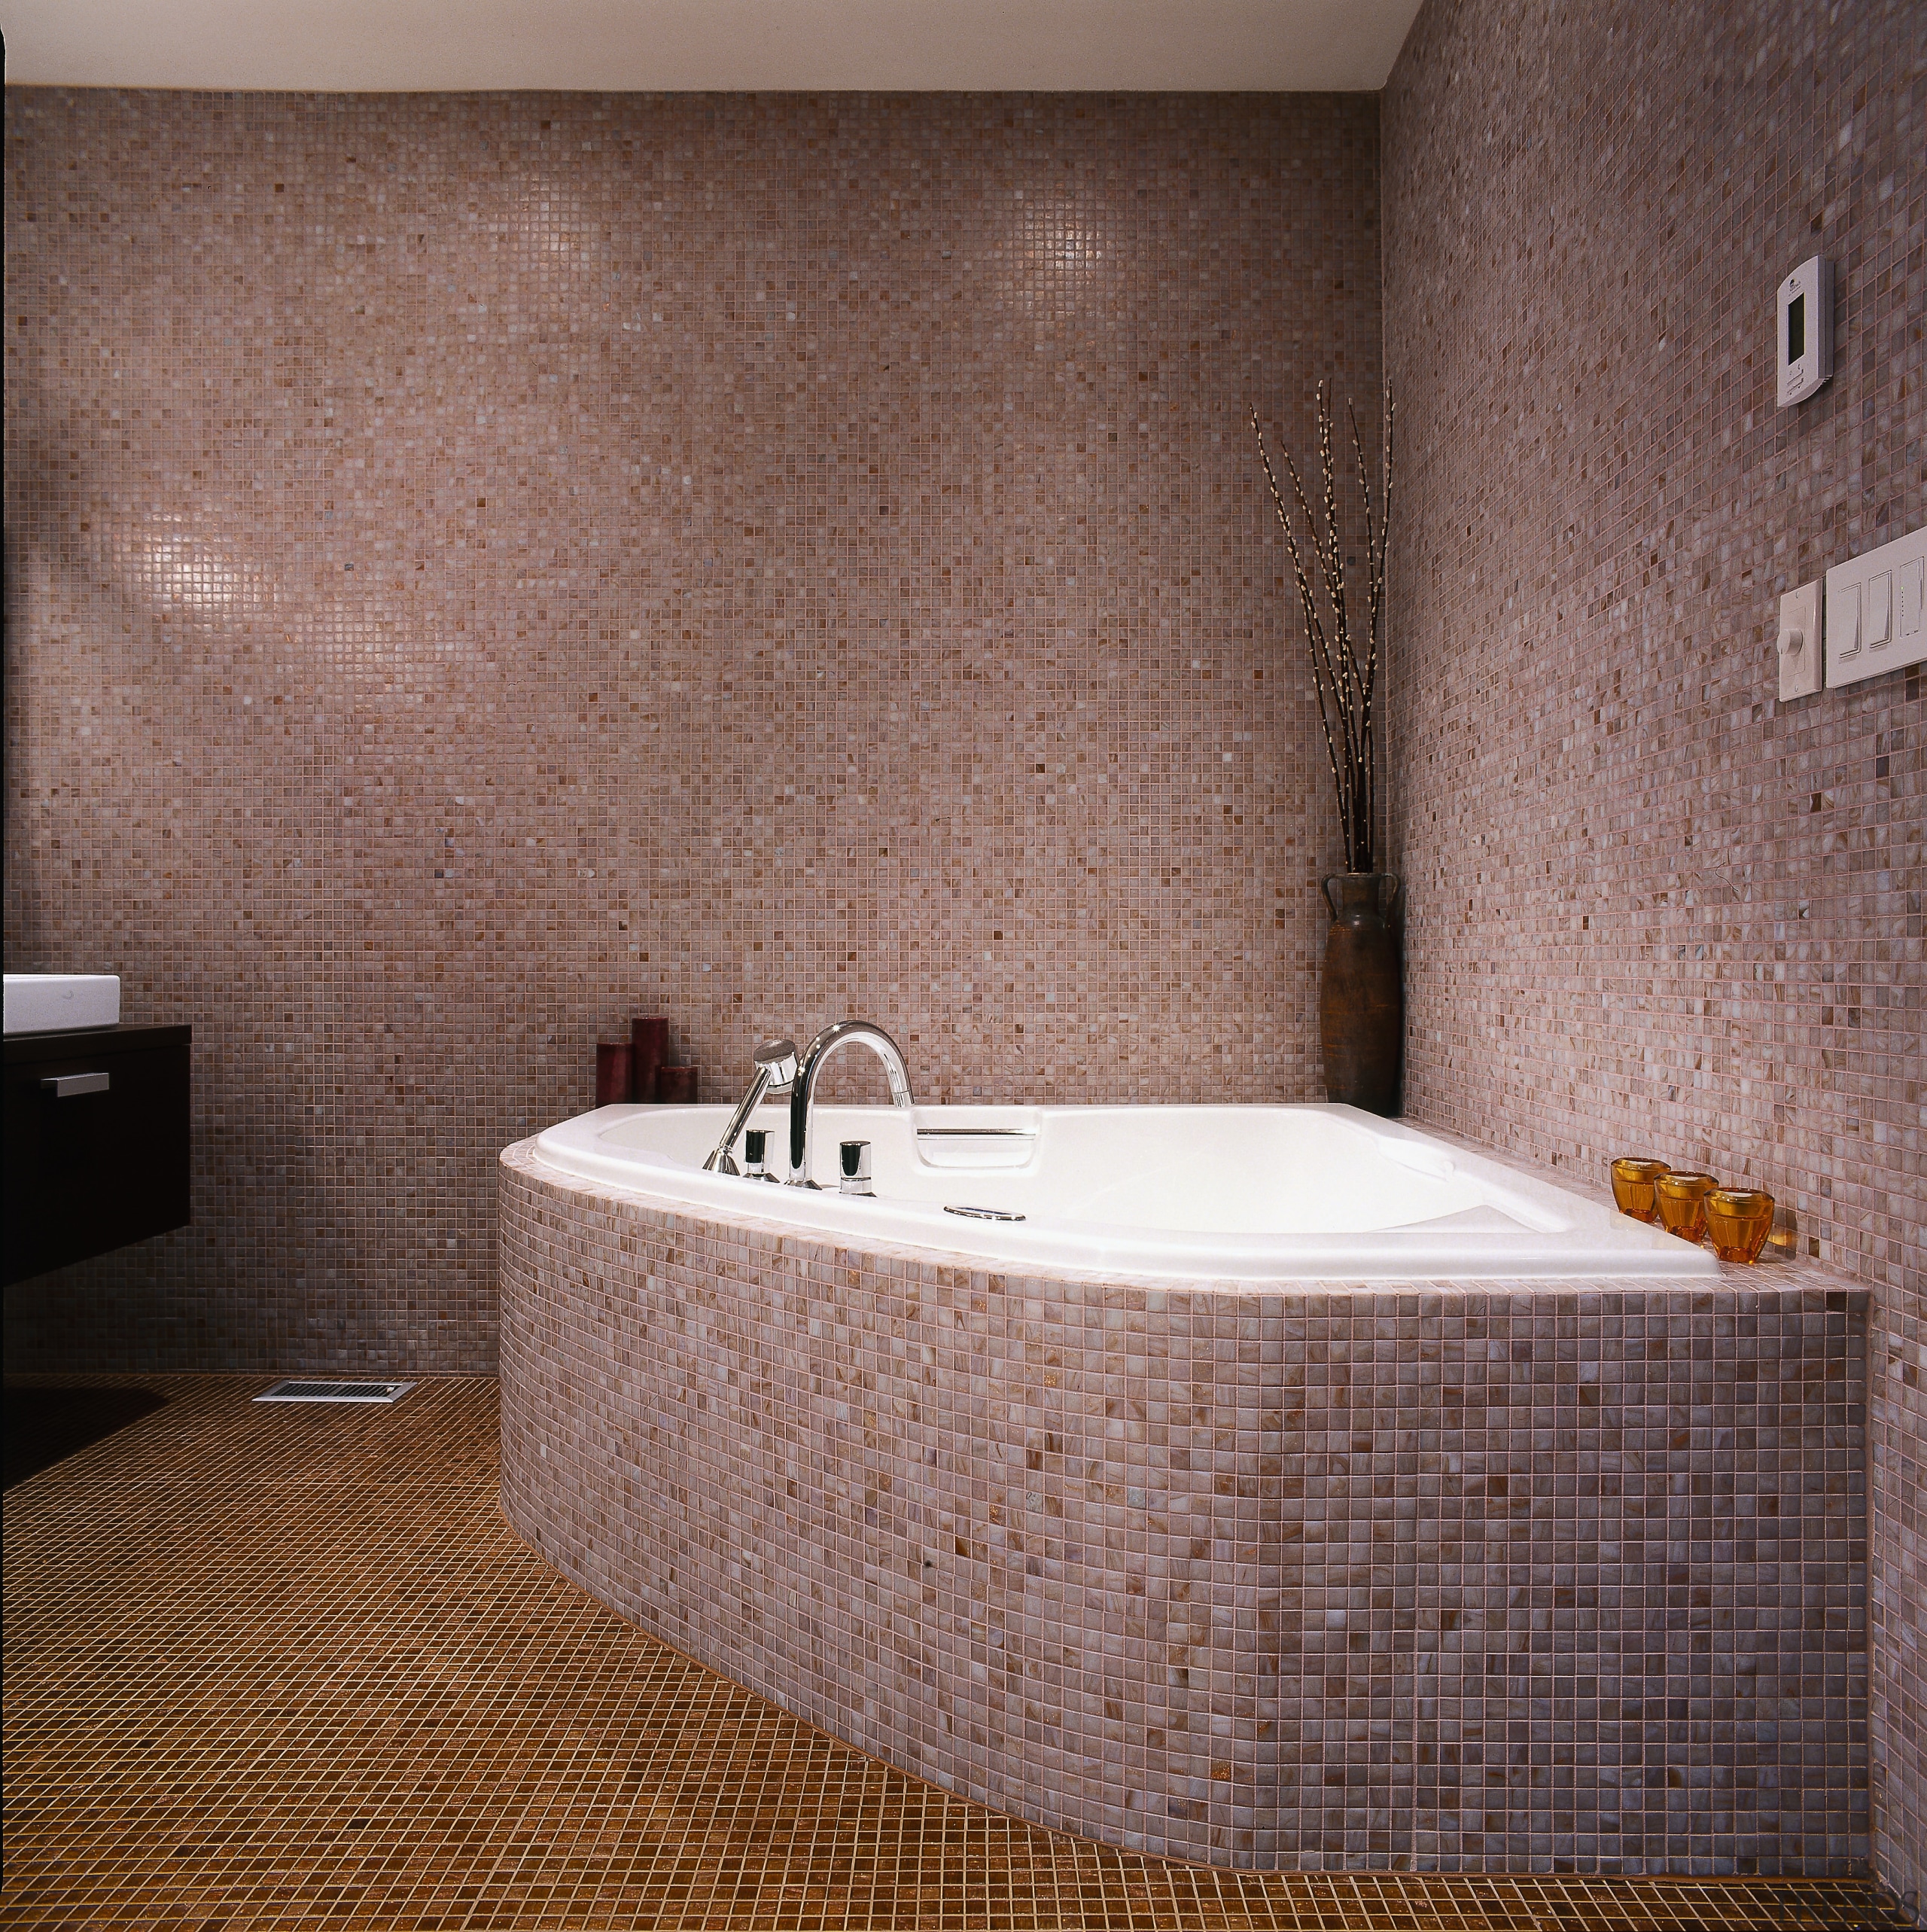 View of this modern bathroom - View of bathroom, bathtub, ceramic, floor, flooring, interior design, plumbing fixture, room, tile, wall, red, gray